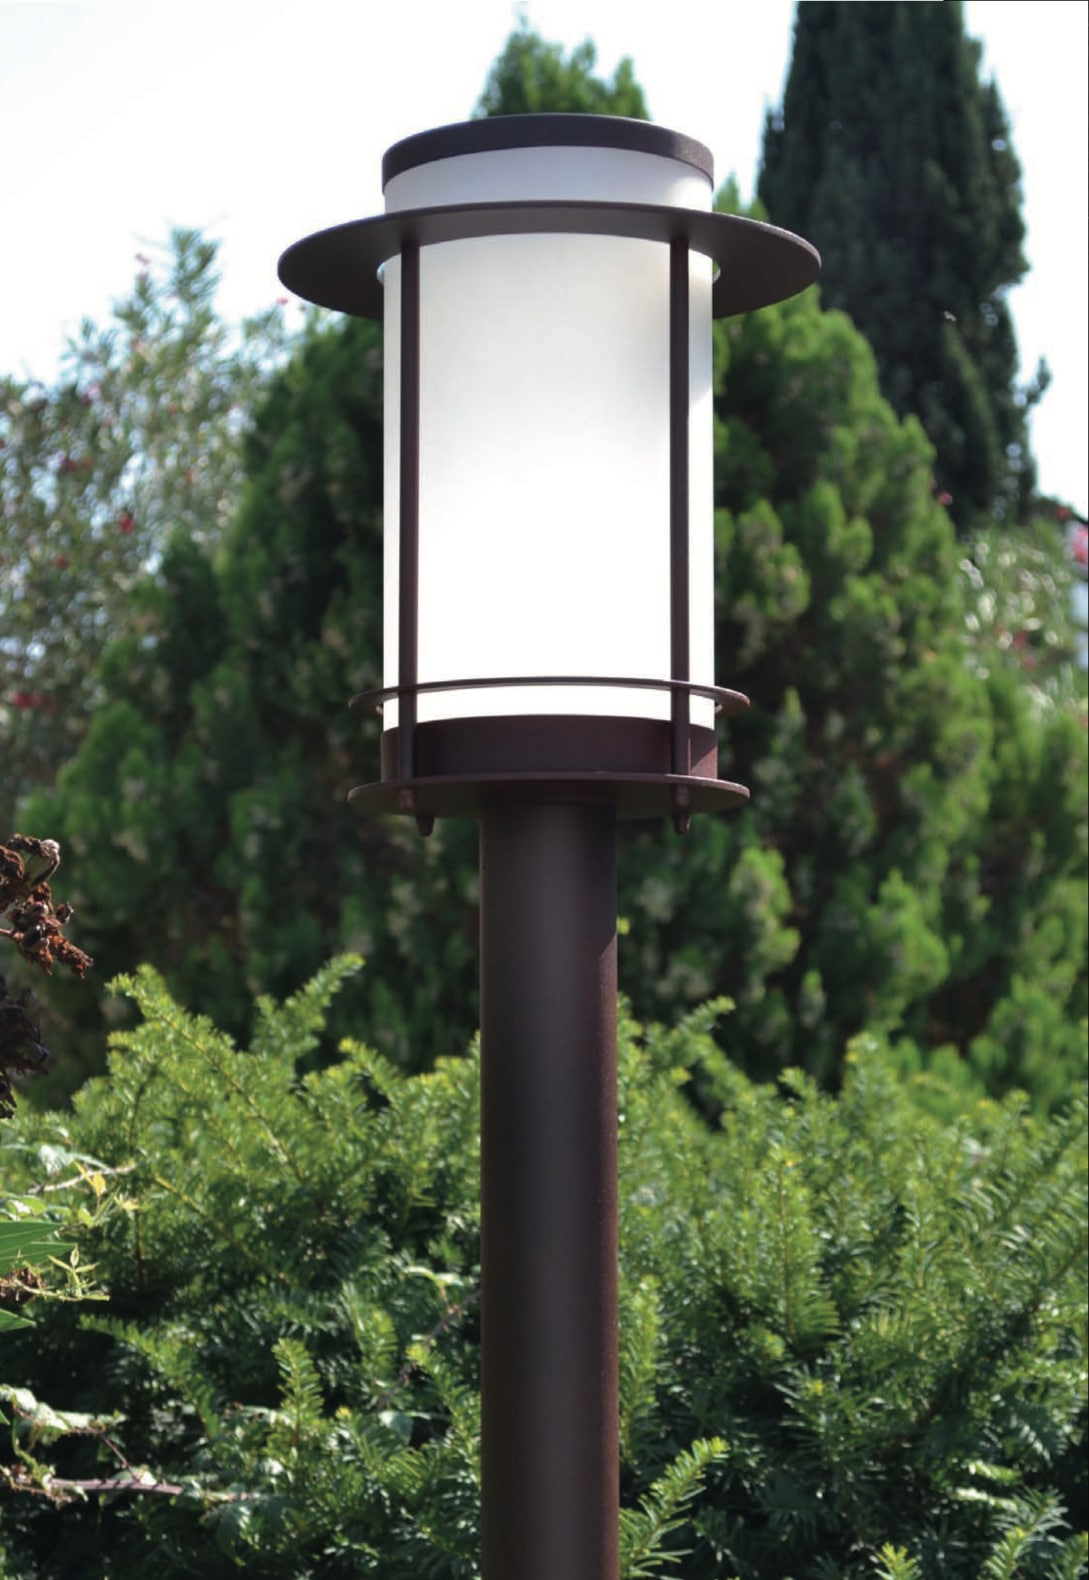 Stylish Art Deco Lantern from Italy